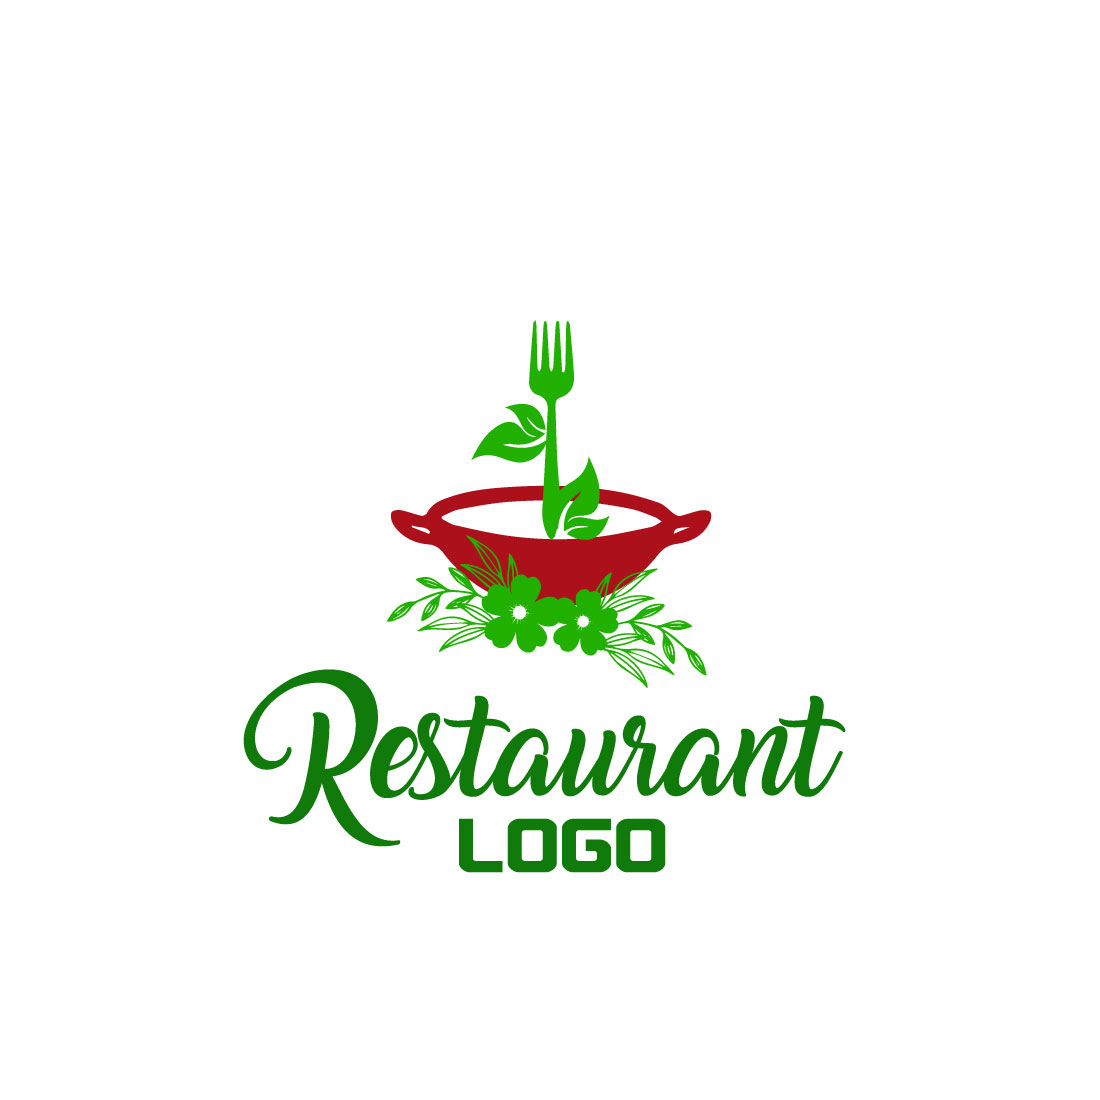 Free Gourmet Goodness logo preview image.